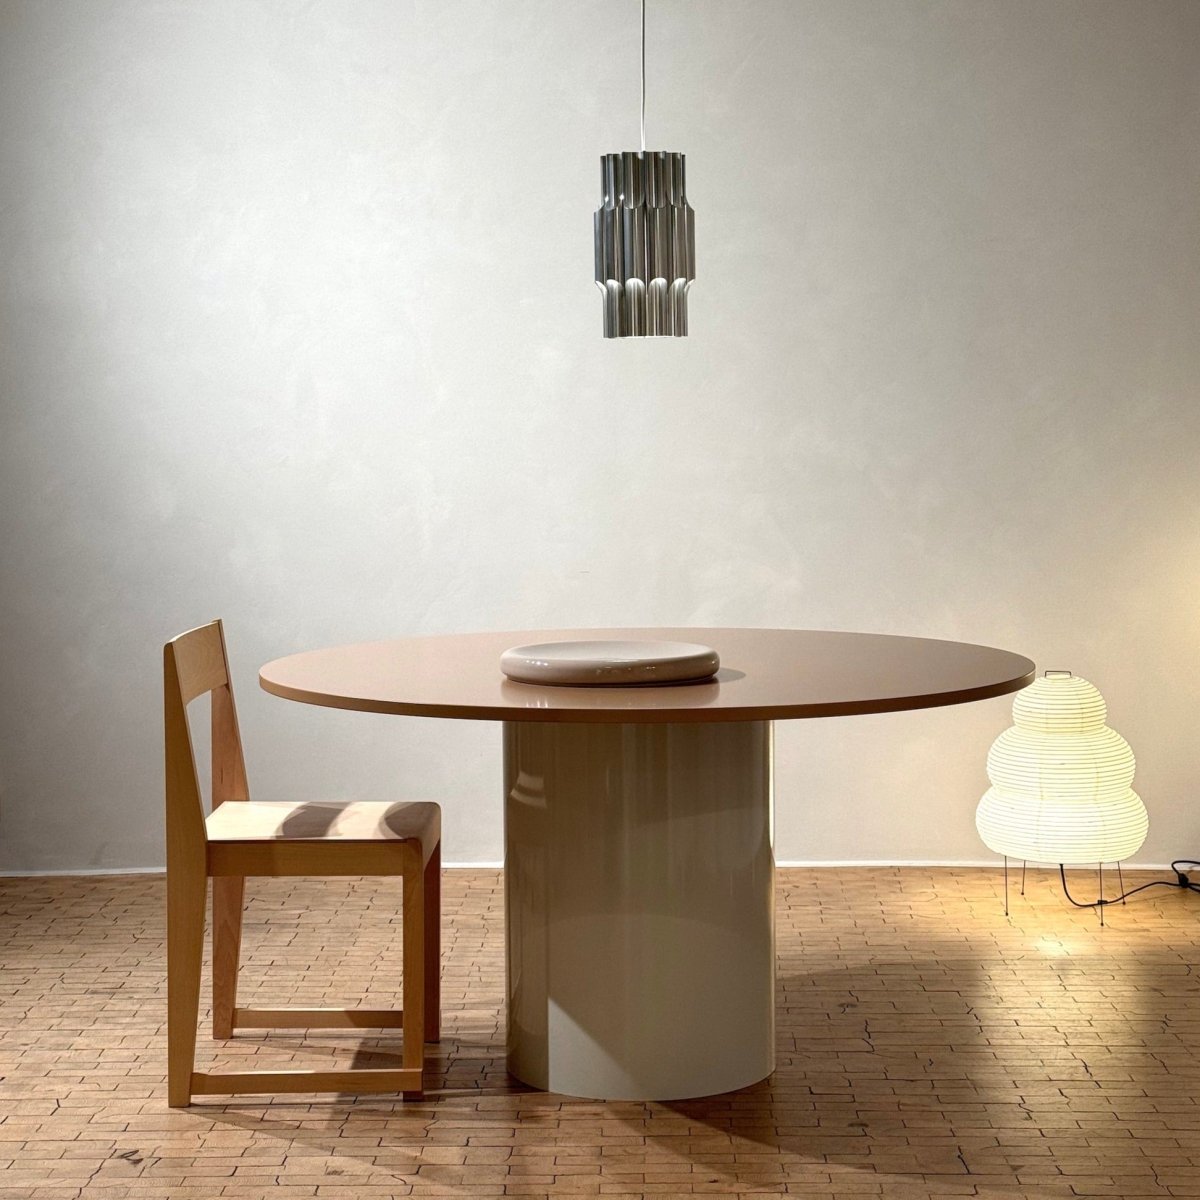 DANSKshop - The Olga Dining Table - Table - DANSKmadeforrooms